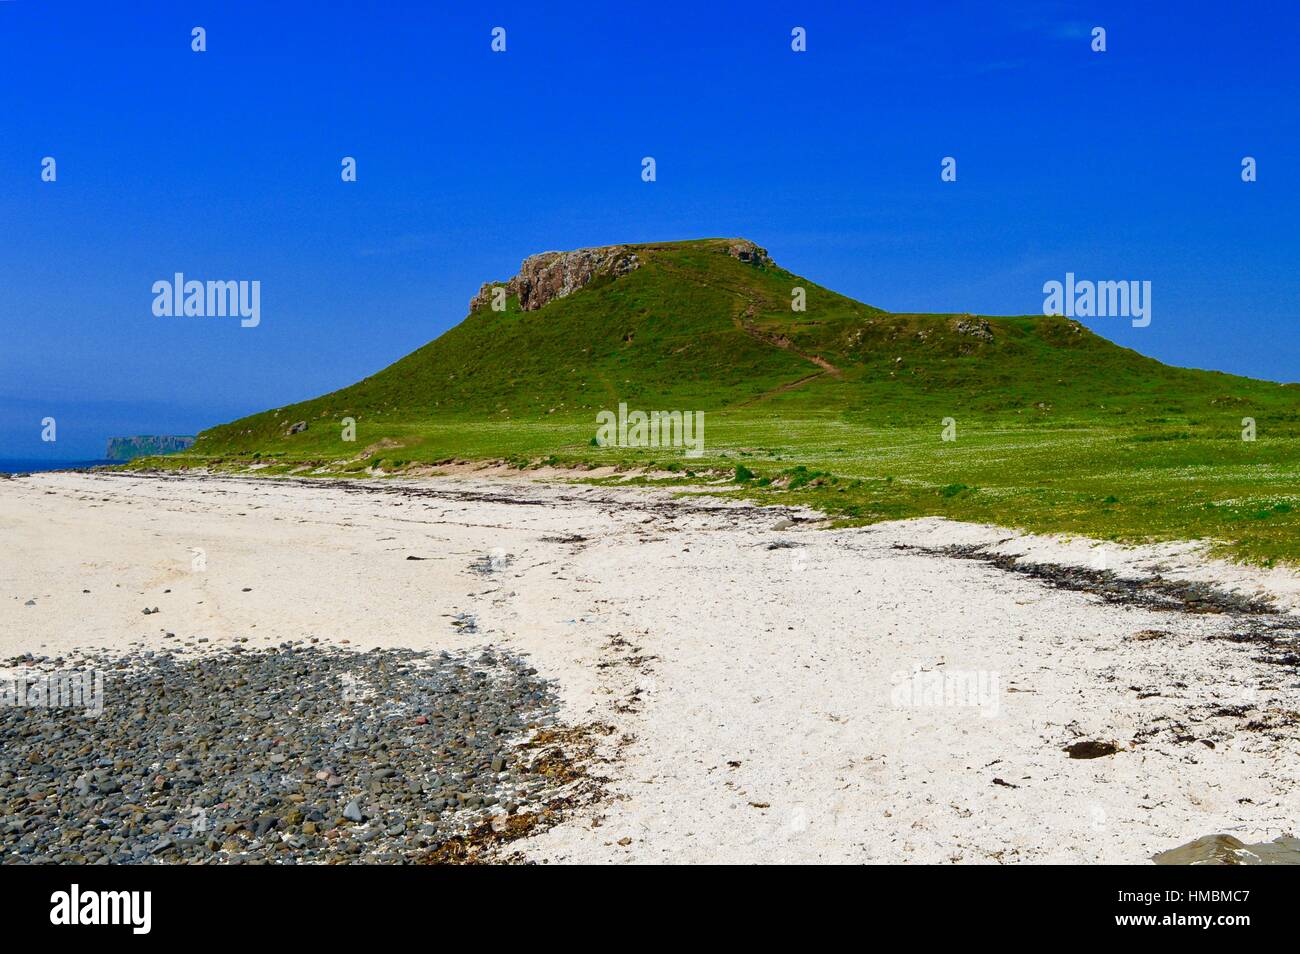 The coral beach at Claigan, Isle of Skye Stock Photo